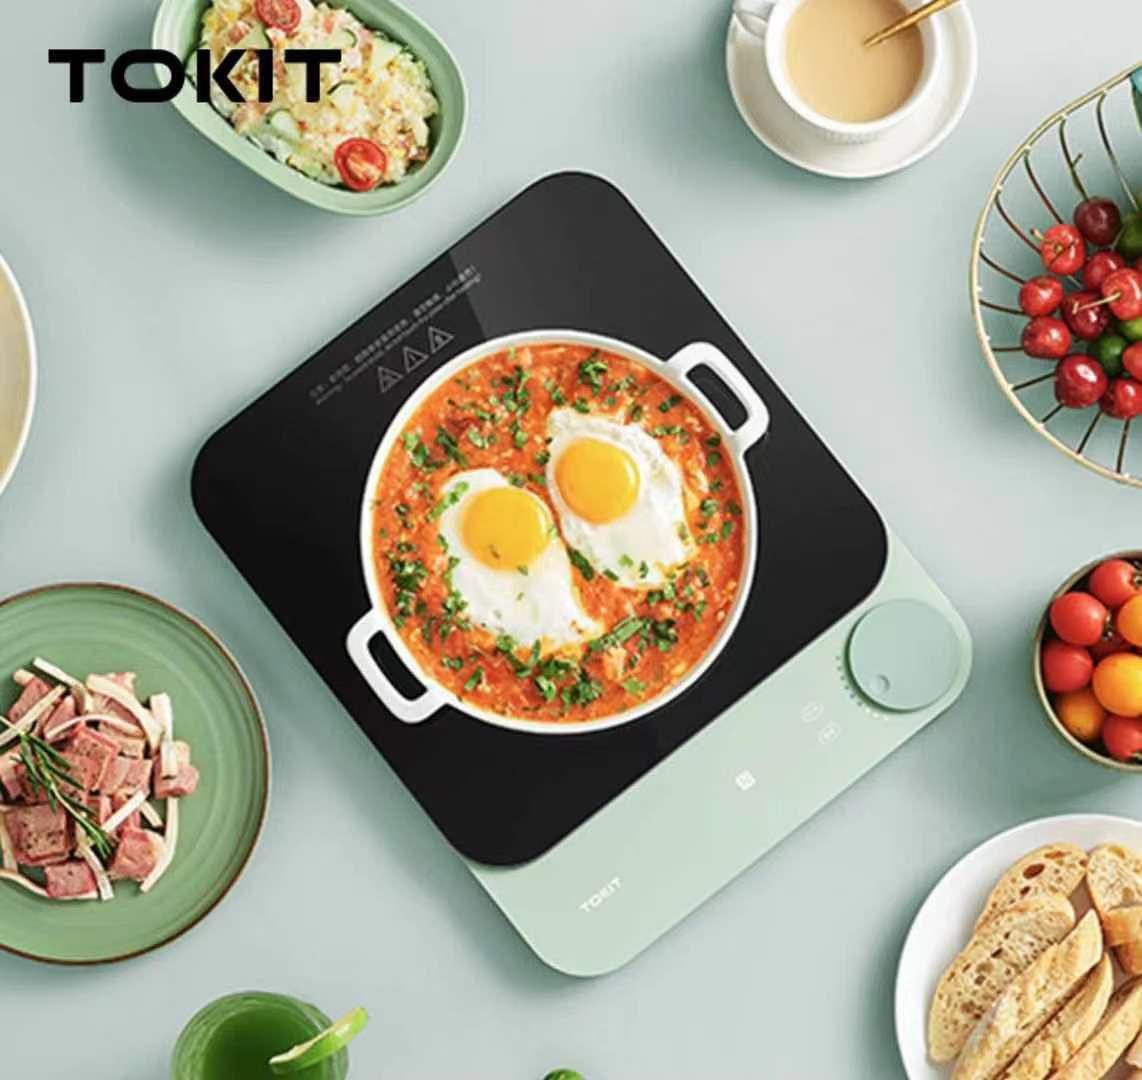 جهاز طبخ من شاومي Xiaomi TOKIT Induction Cooker - cG9zdDo1MzI3NTM=